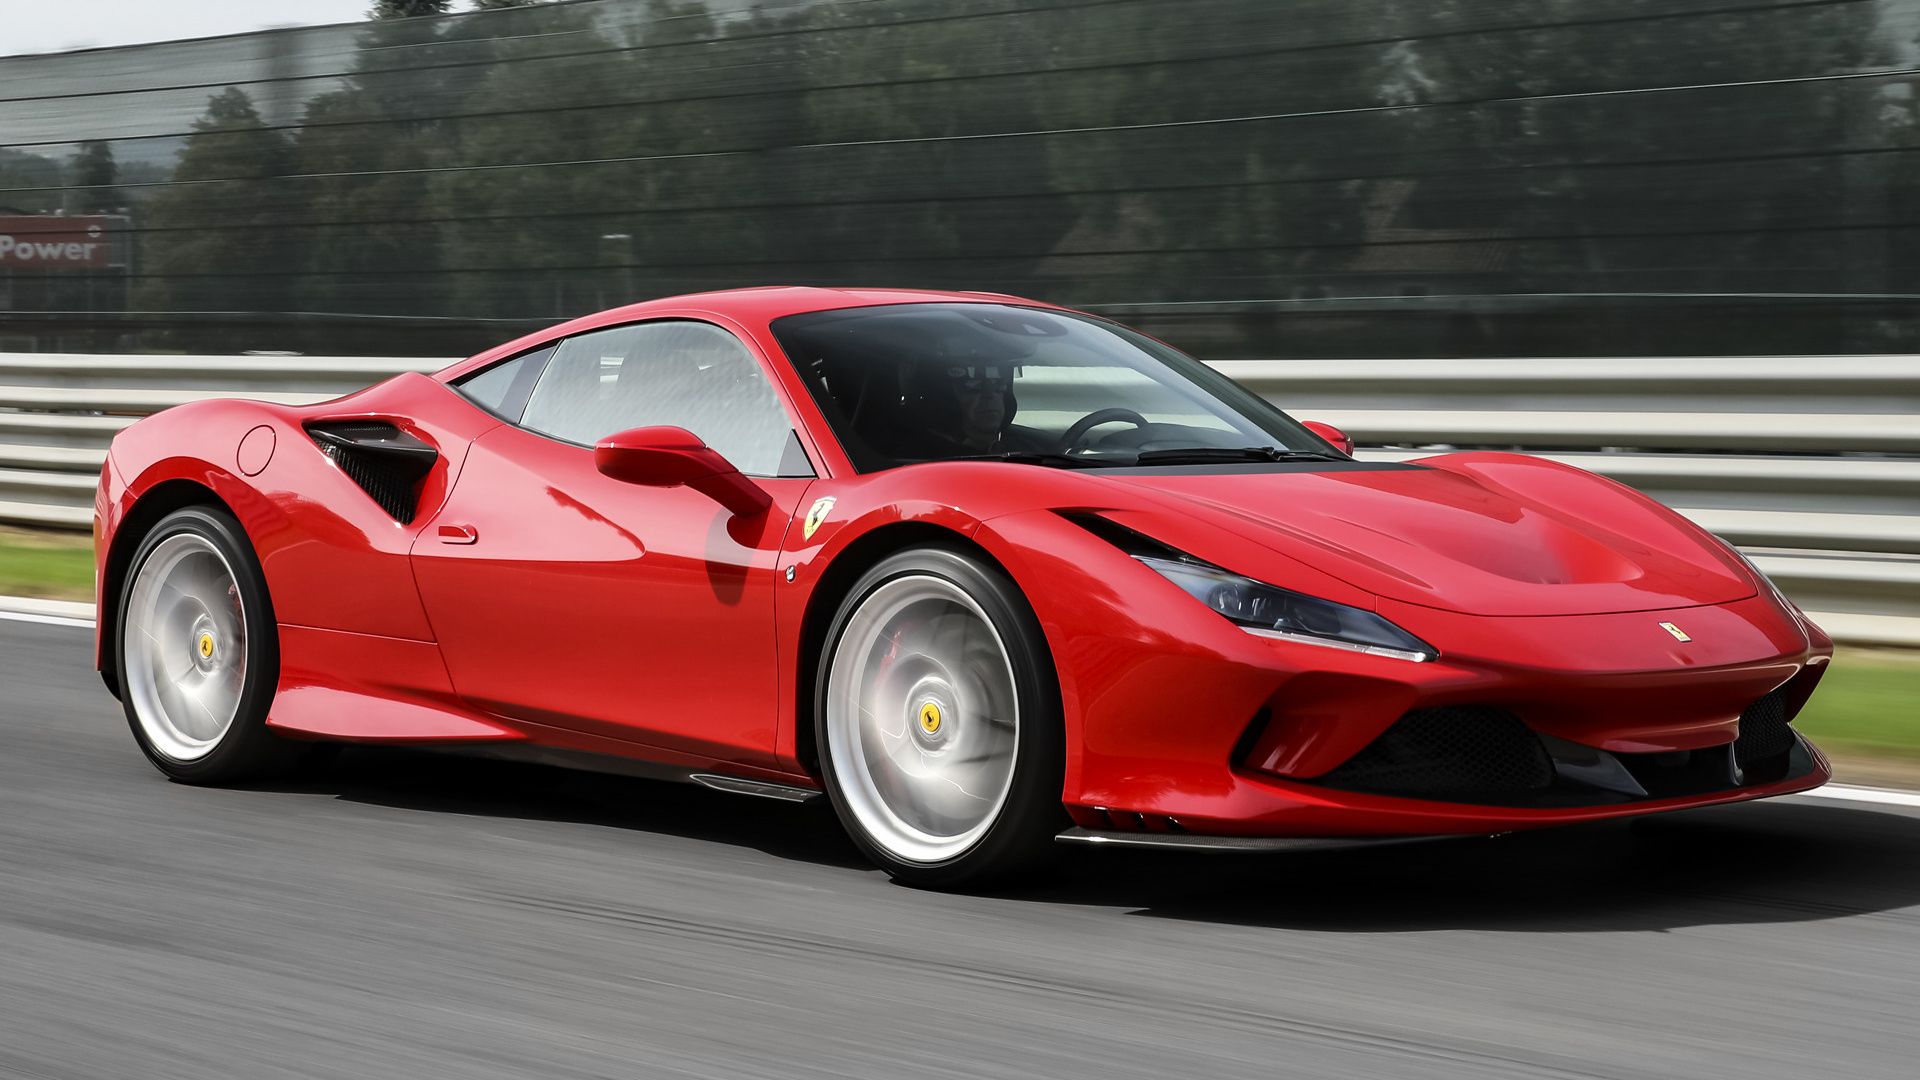 Ferrari Supercars: News, Picture, Models & History